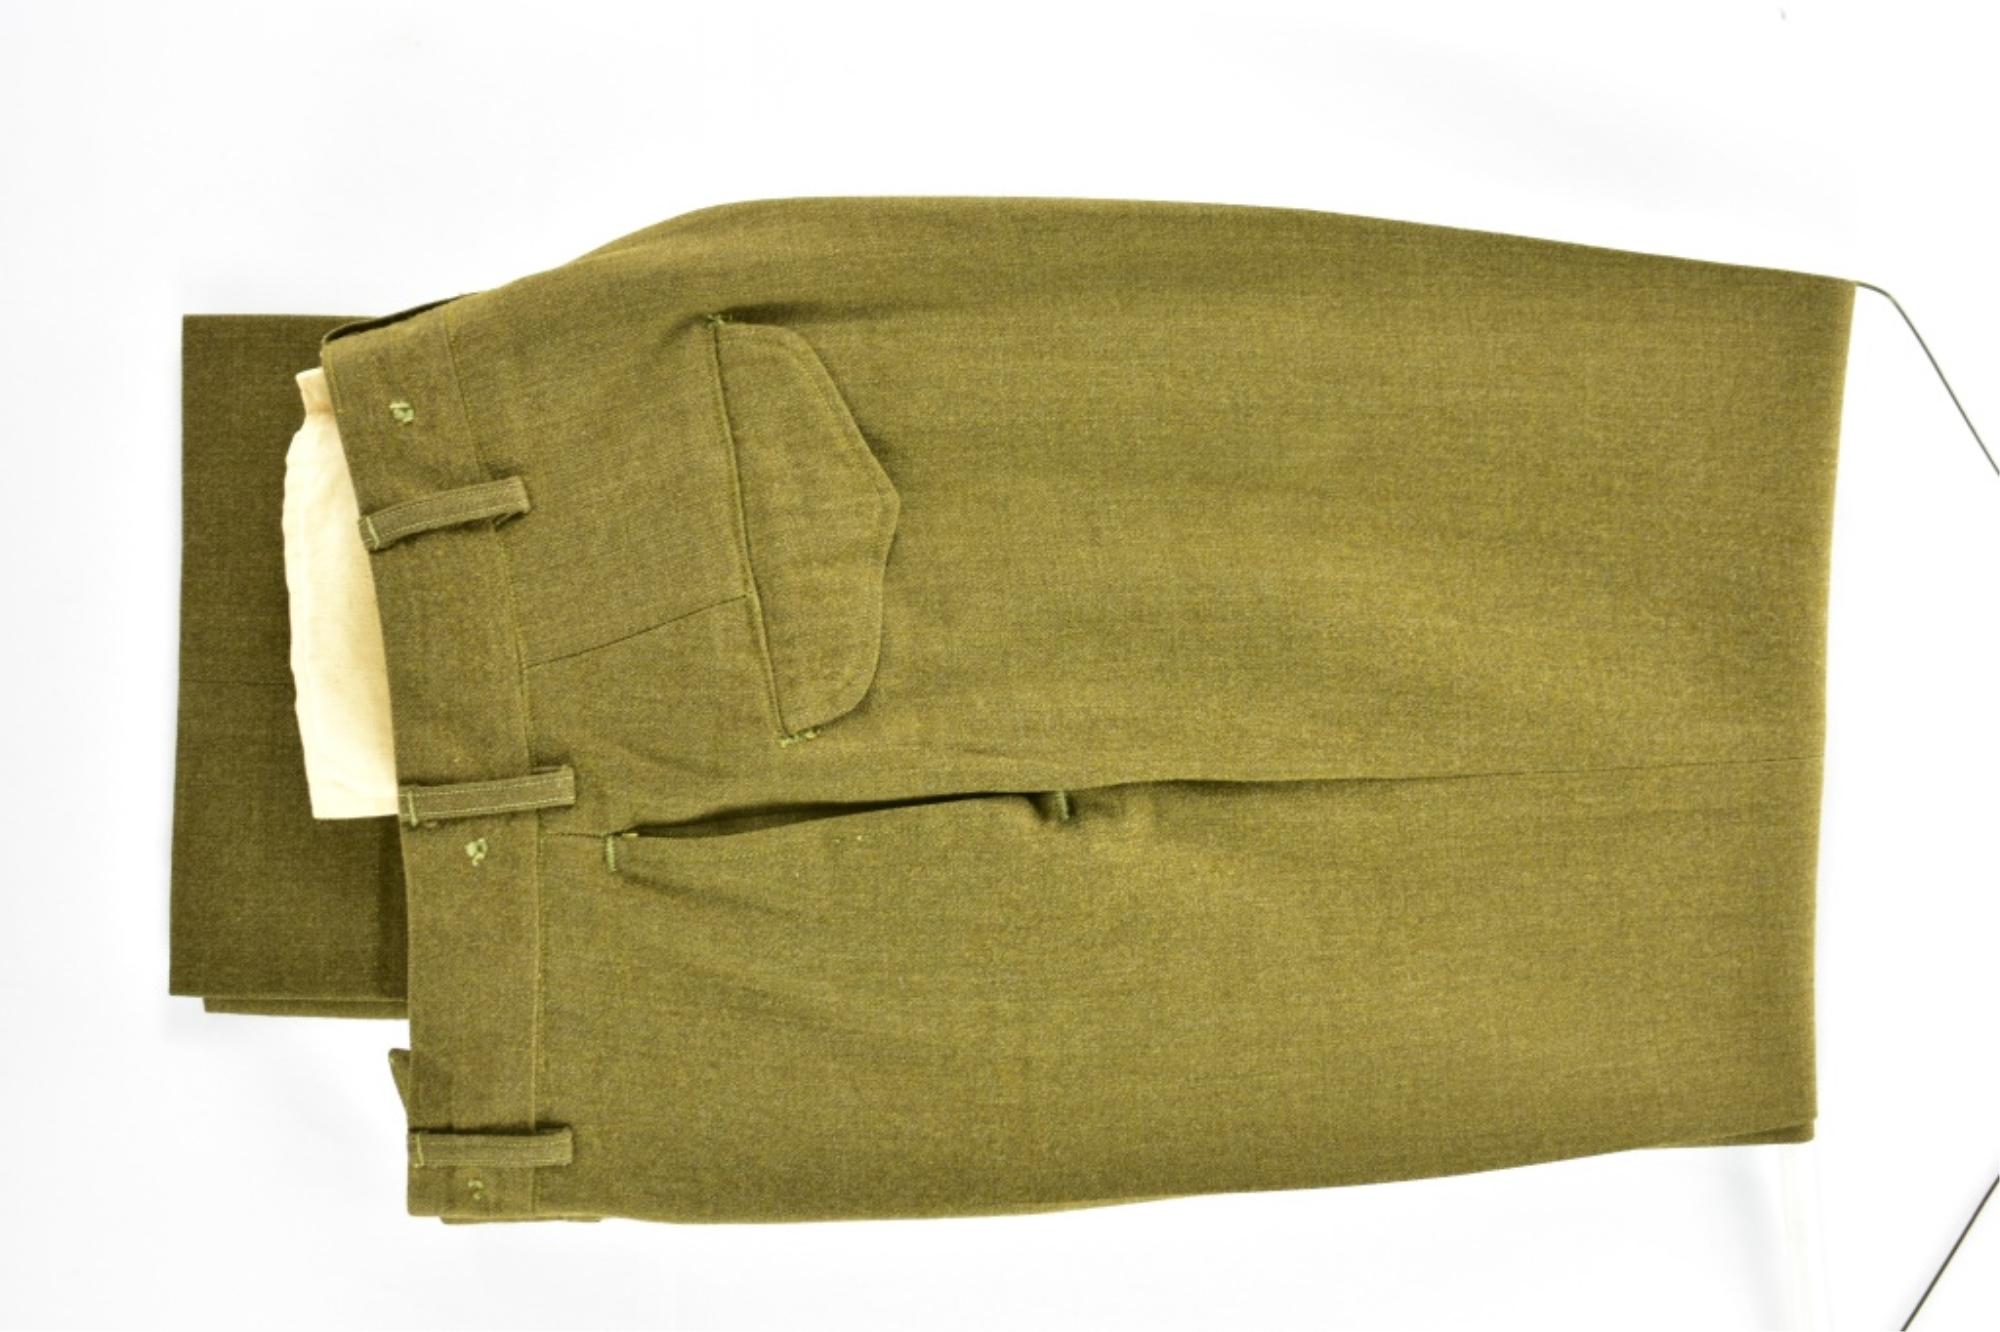 WWII/ Korea U.S. Army "Ike" Uniform